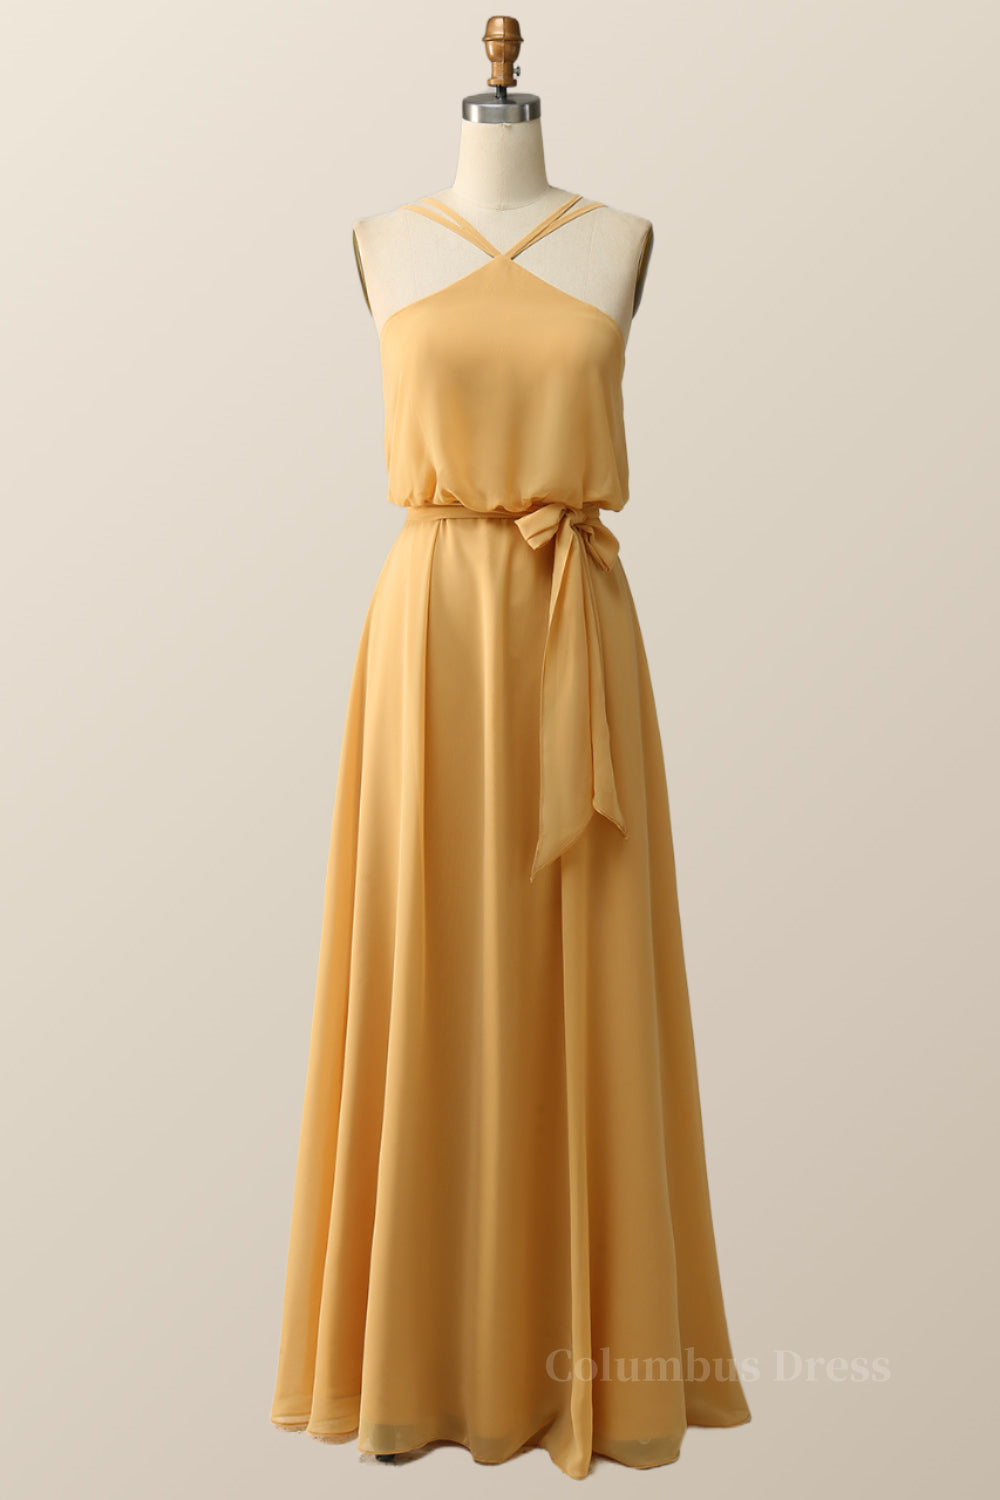 Halter Straps Yellow Chiffon Long Corset Bridesmaid Dress outfit, Maxi Dress